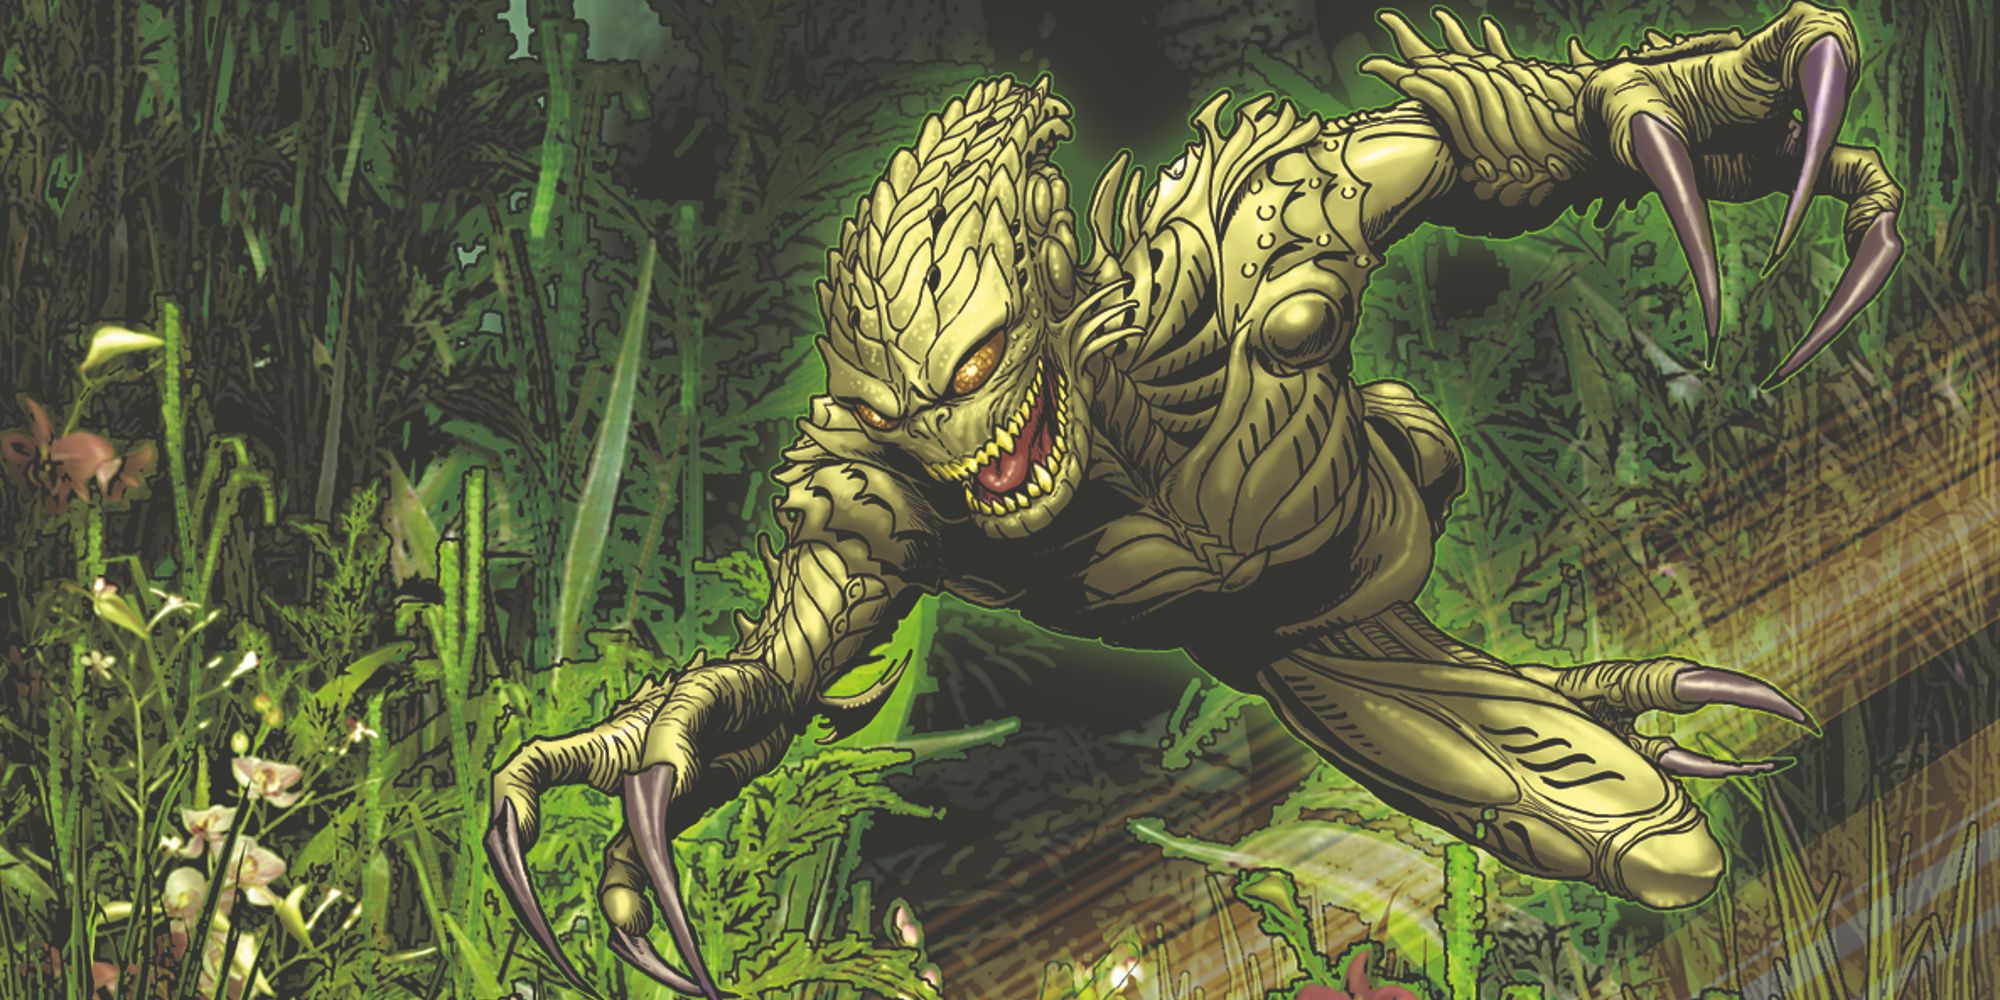 The Predator as depicted in the Predator The Original Screenplay comic